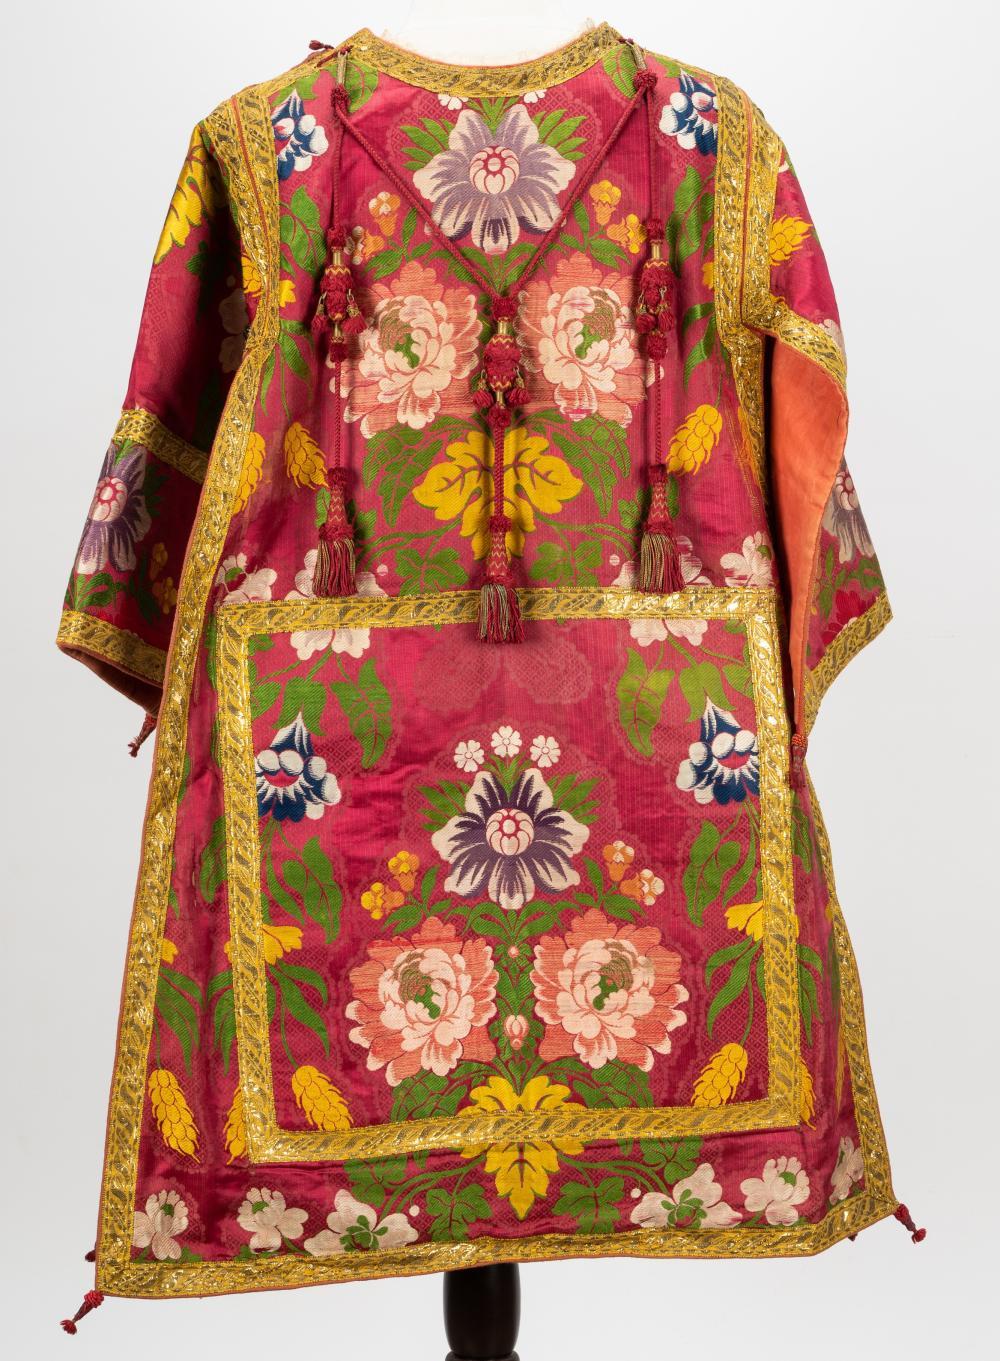 Colonial Spanish Silk Religious Dalmatic Robe Chasuble of Spanish Colonial, Textil, handgefertigt in Seide.